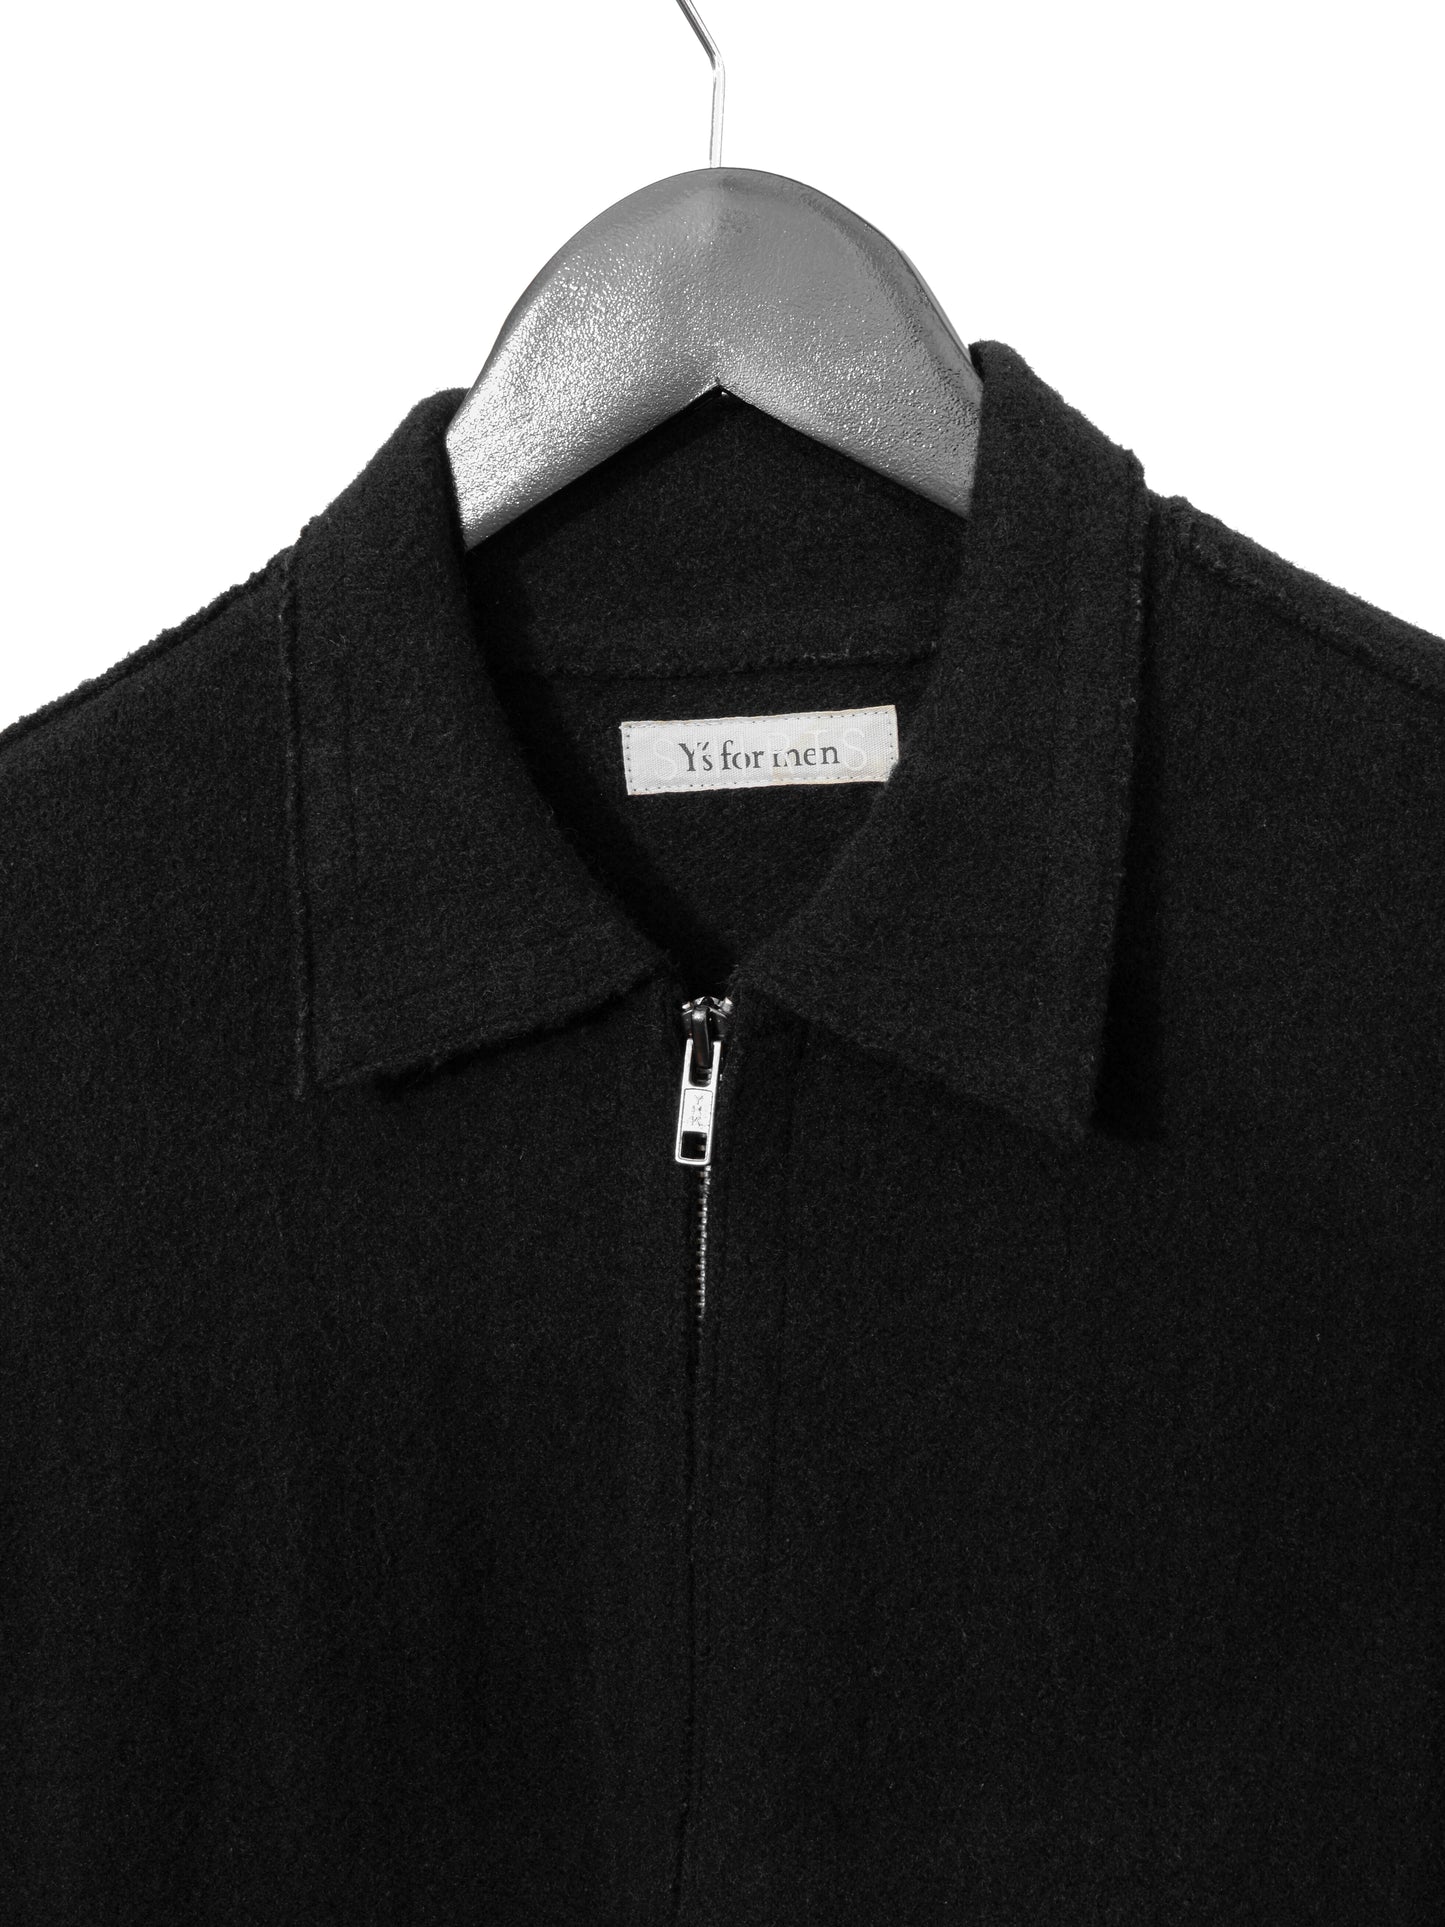 knit zip blouson black ∙ wool ∙ one size